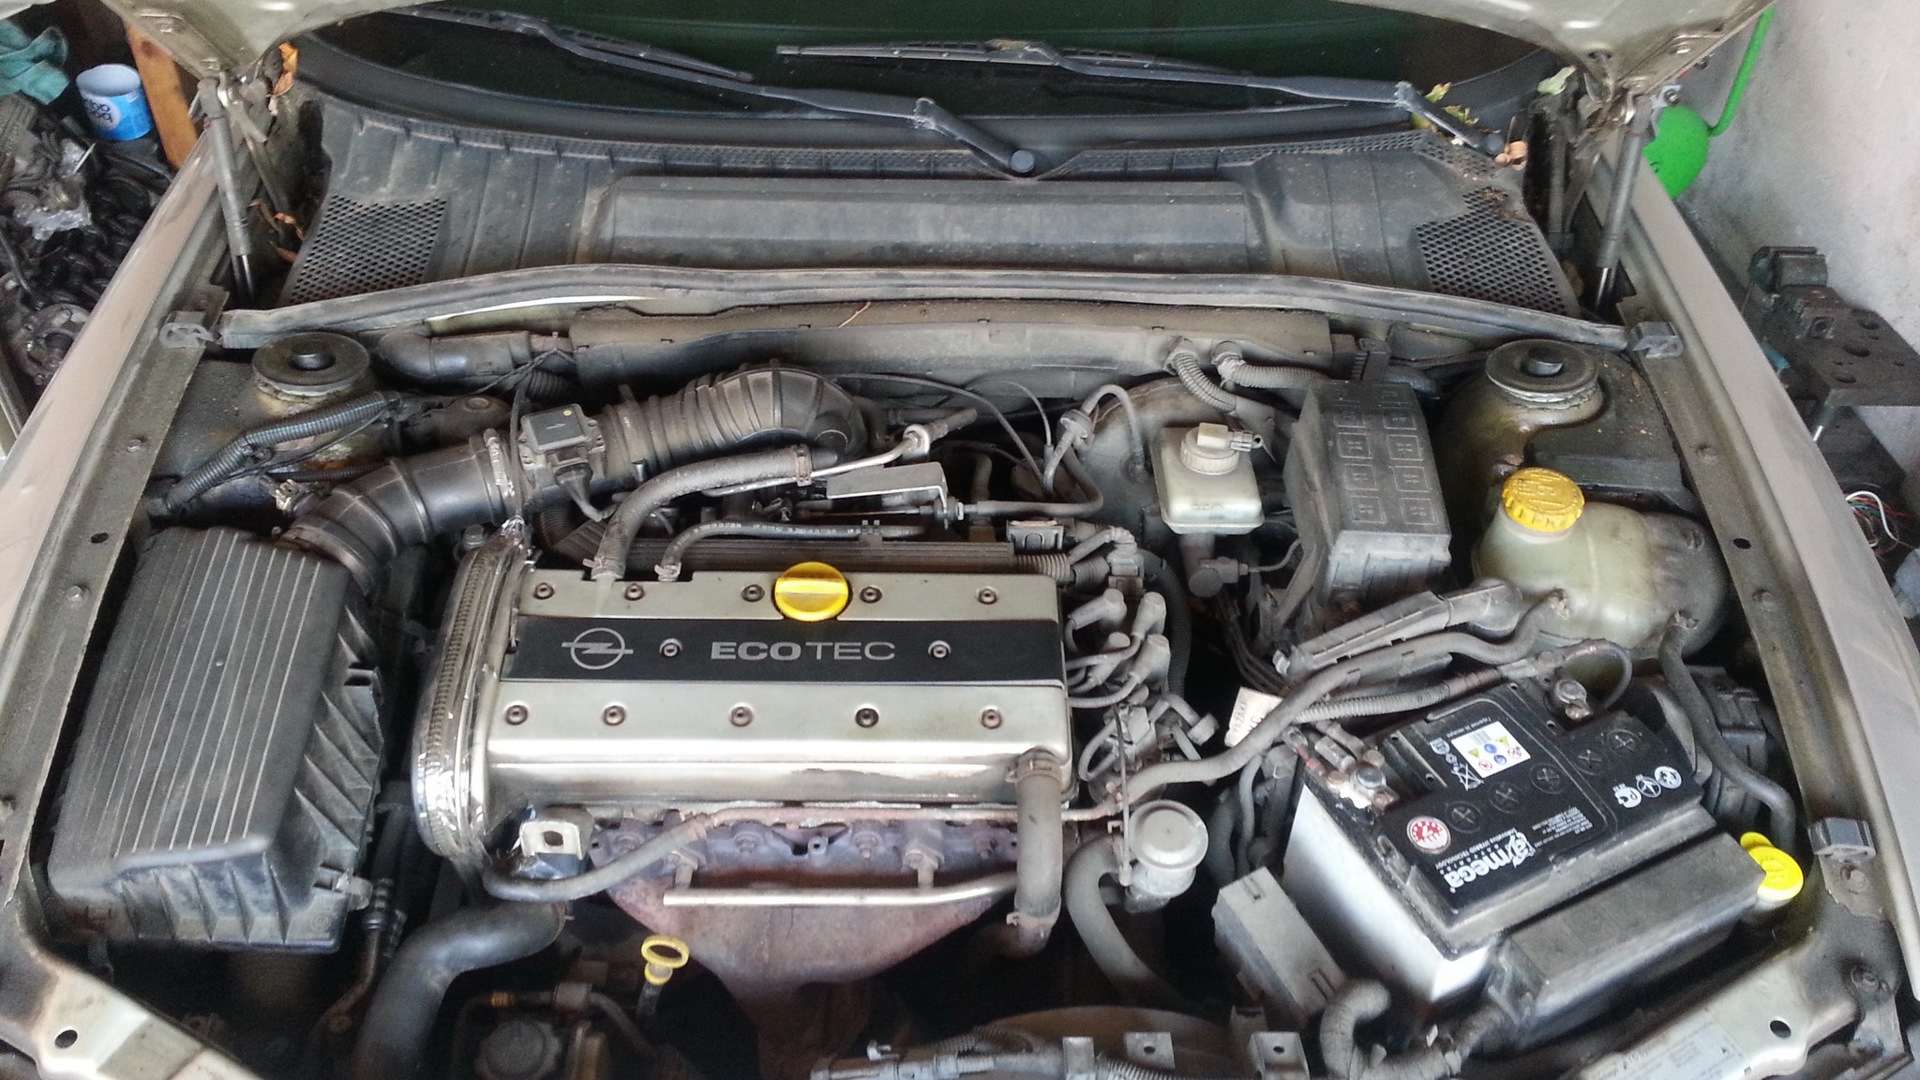 Мотор Opel Vectra b 1.8 x18xe 1. Двигатель Опель Вектра б 1.8 x18xe. Опель Вектра б x18xe. Opel Vectra b двигатель 1.8. Двигатель опель вектра б 1.8